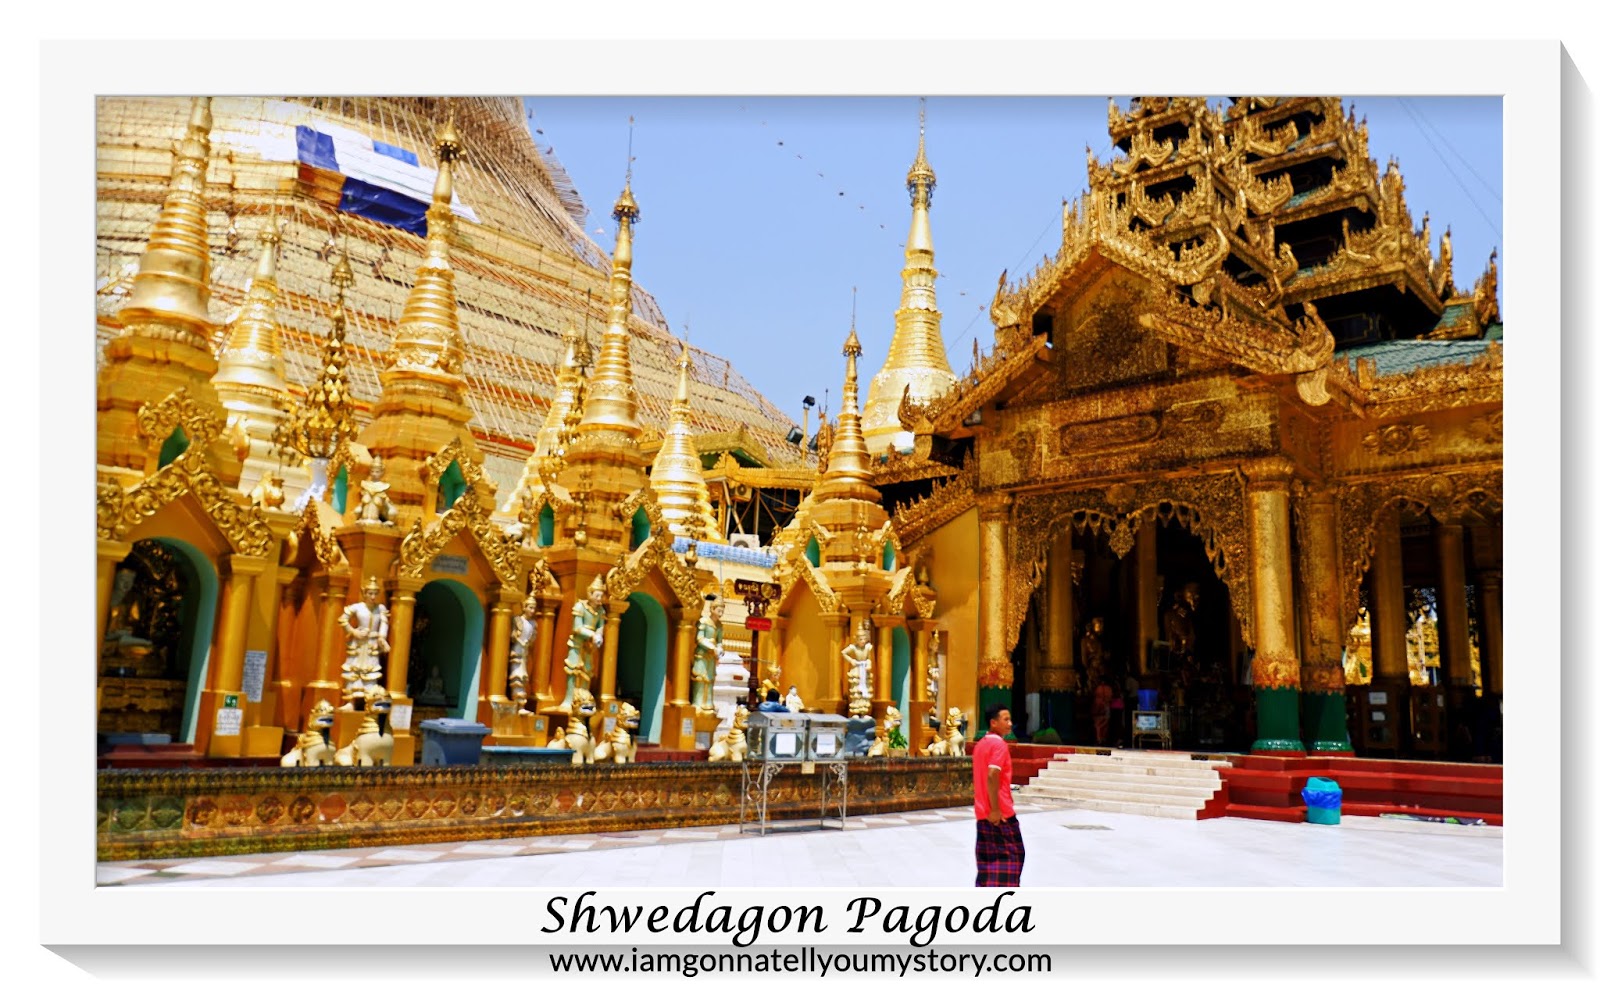 Made in myanmar. Шведагон внутри. Made in Myanmar Страна производитель. 8. Пагода Шведагон горизонтальное и вертикальное фото.